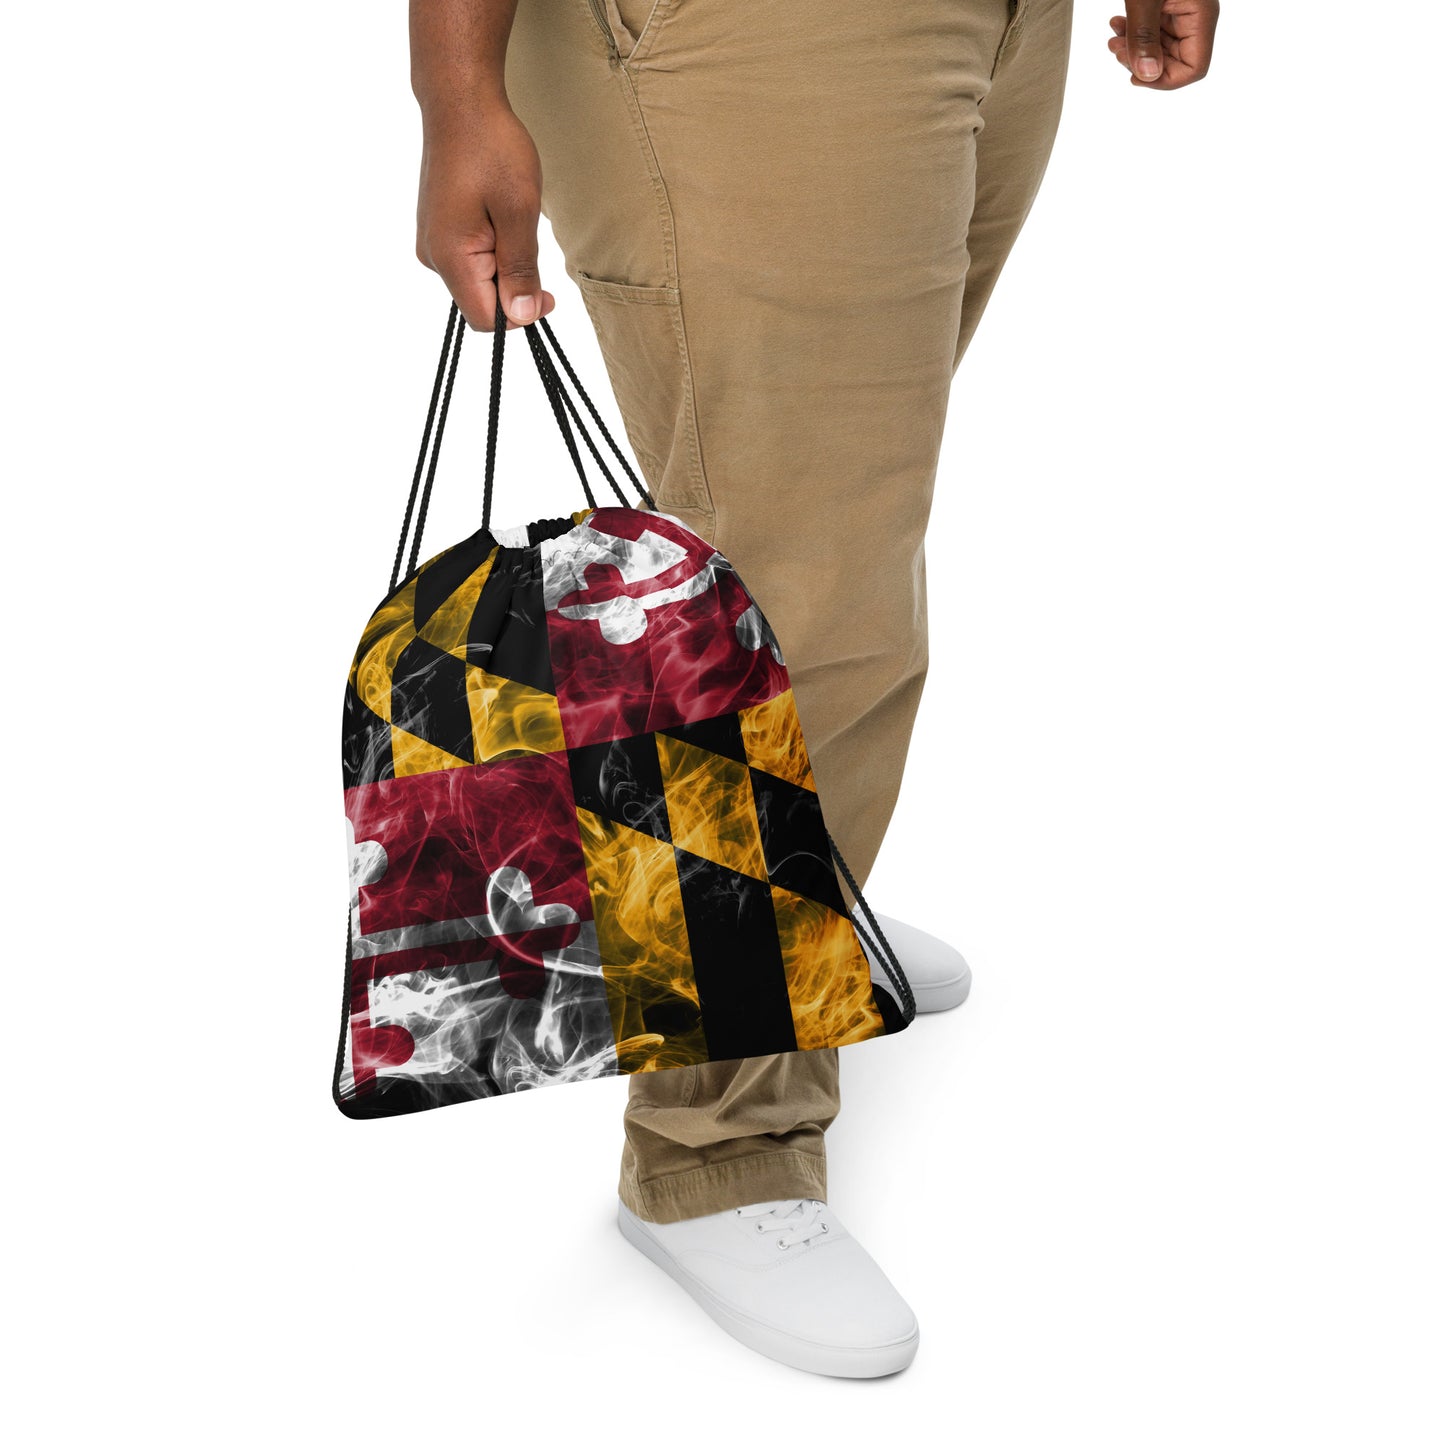 Maryland Drawstring bag